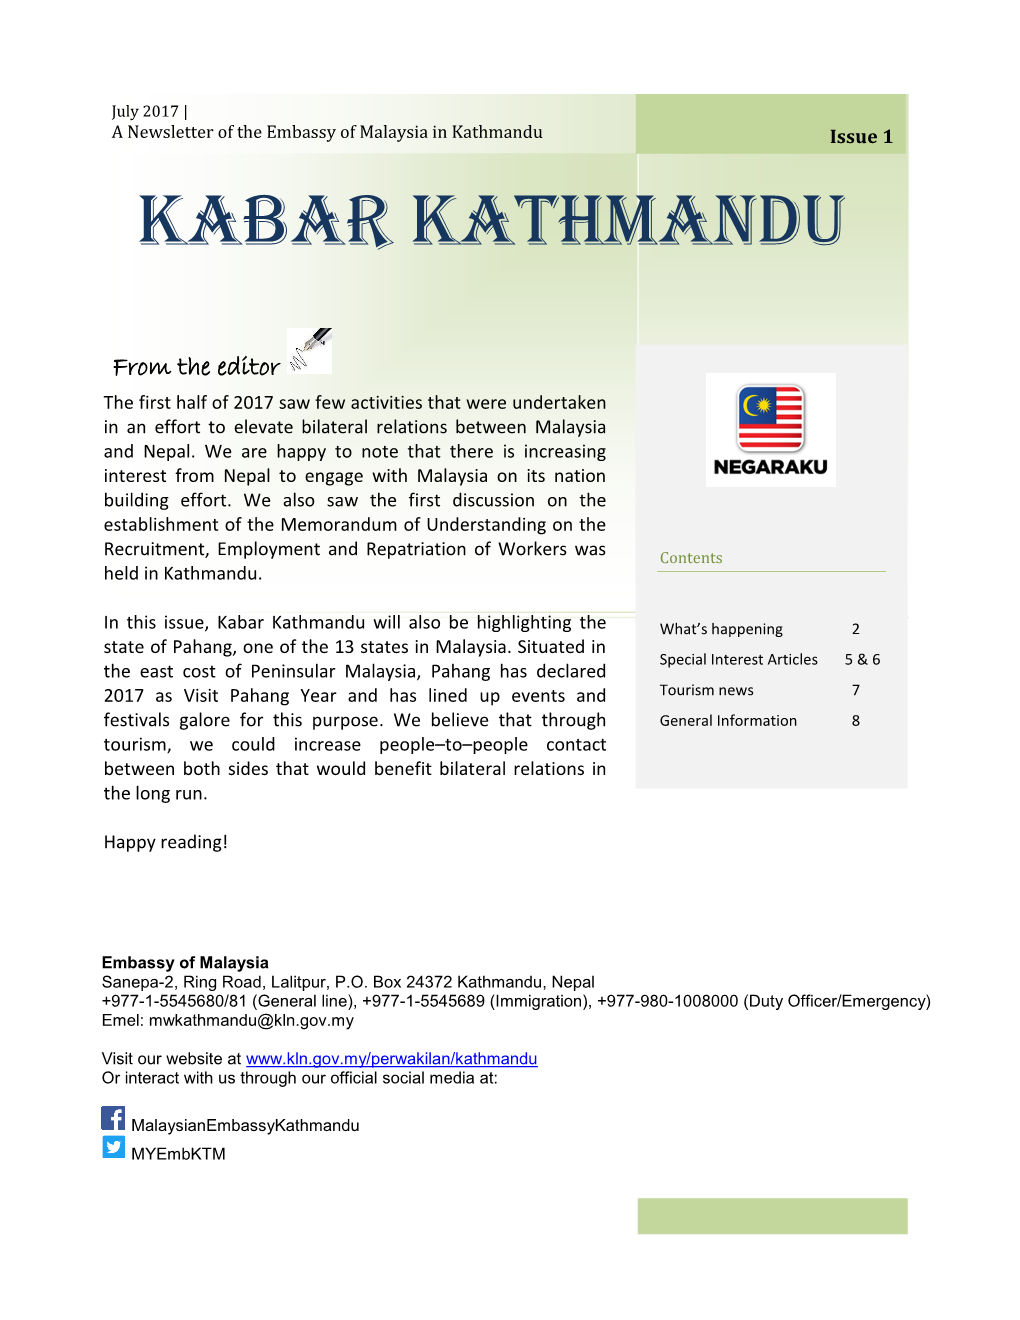 KABAR KATHMANDU Lead Story Headline